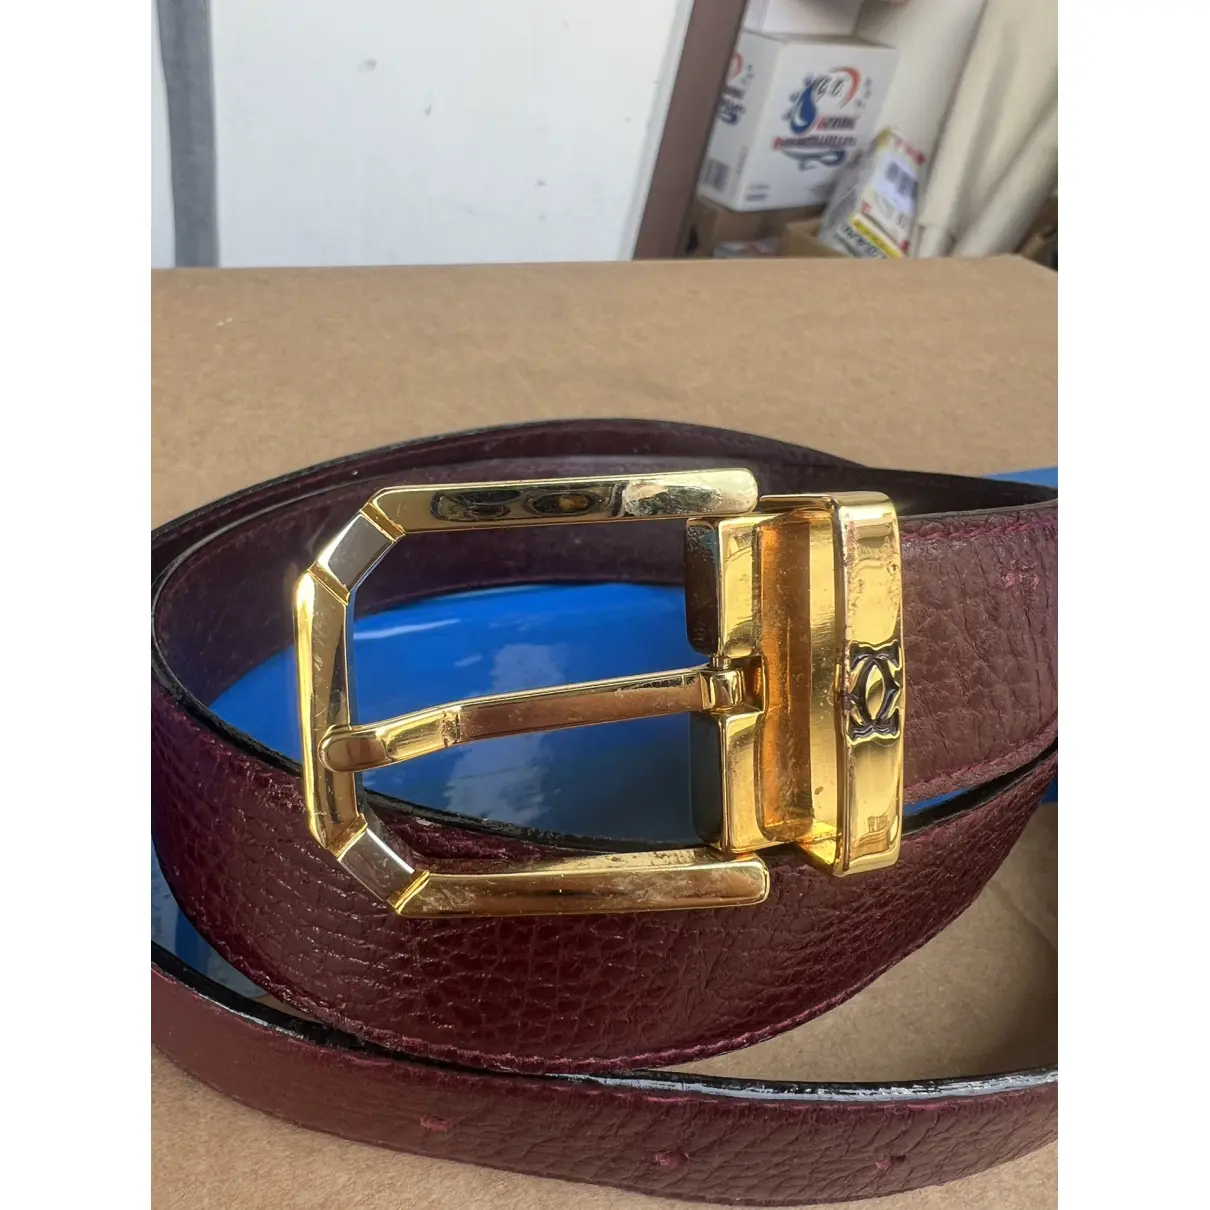 Buy Cartier Leather belt online